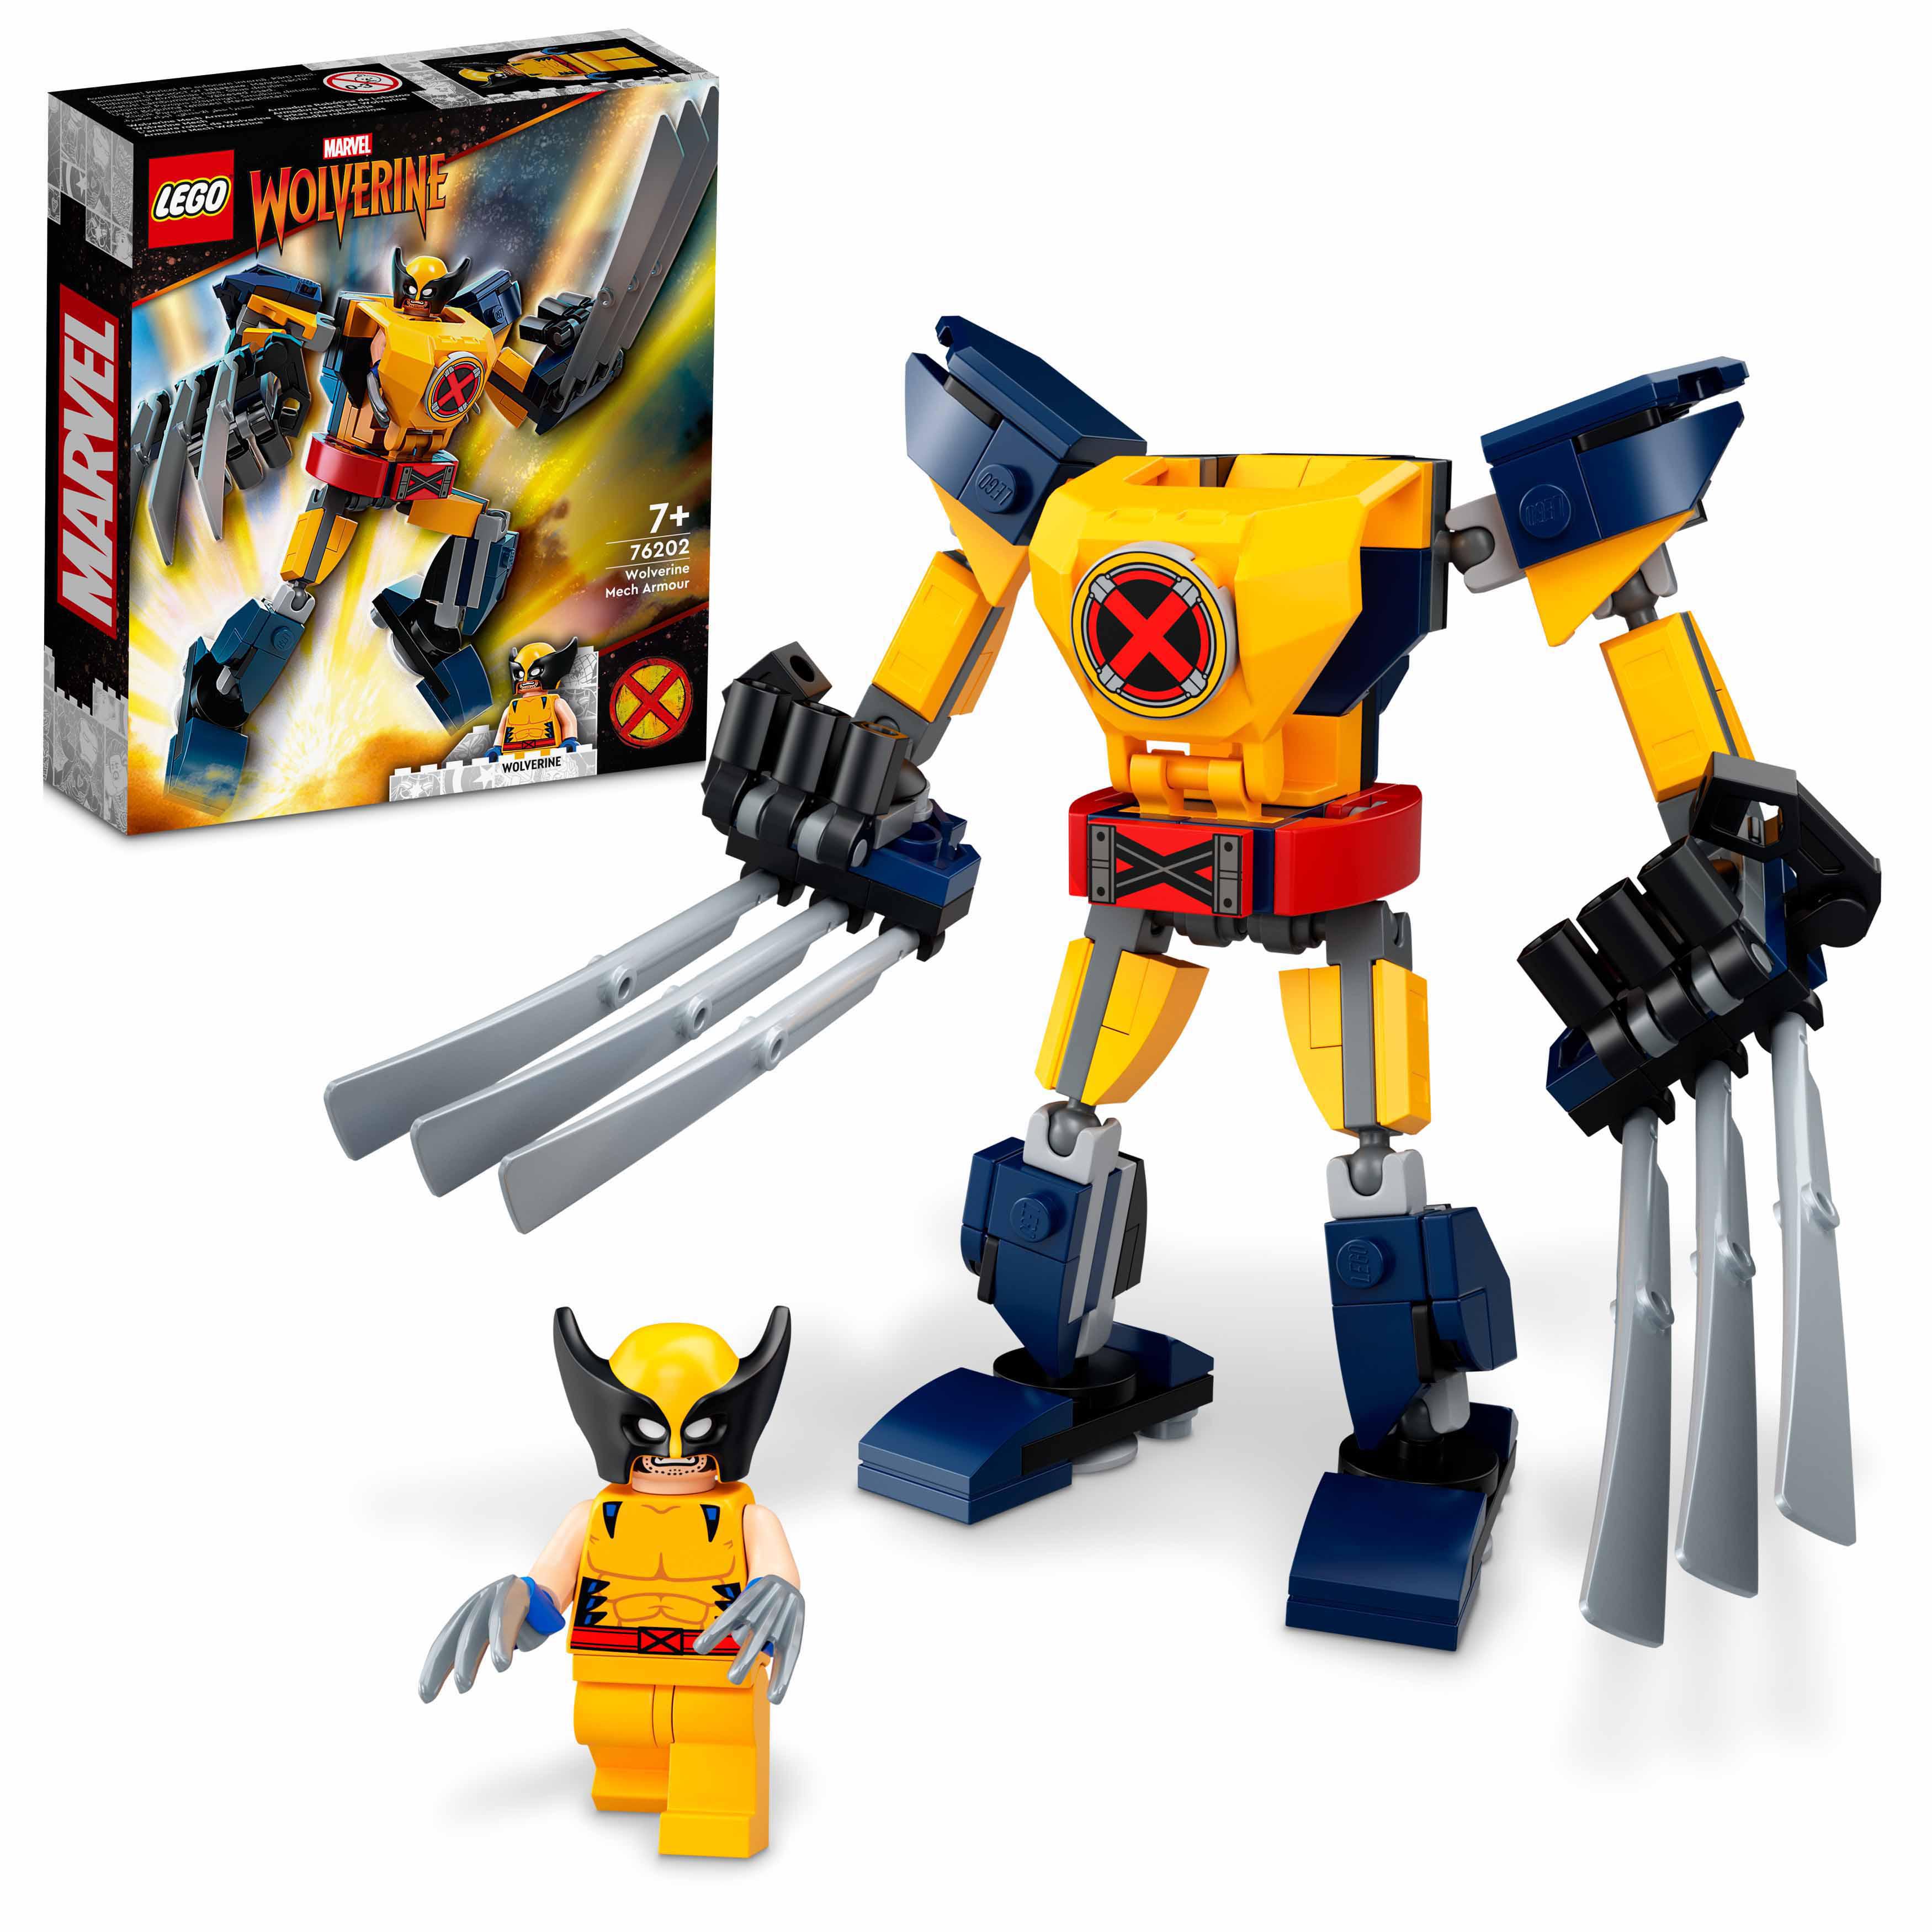 LEGO Marvel Armatura Mech Wolverine, Mattoncini Creativi con Action Figure, Gioc 76202, , large